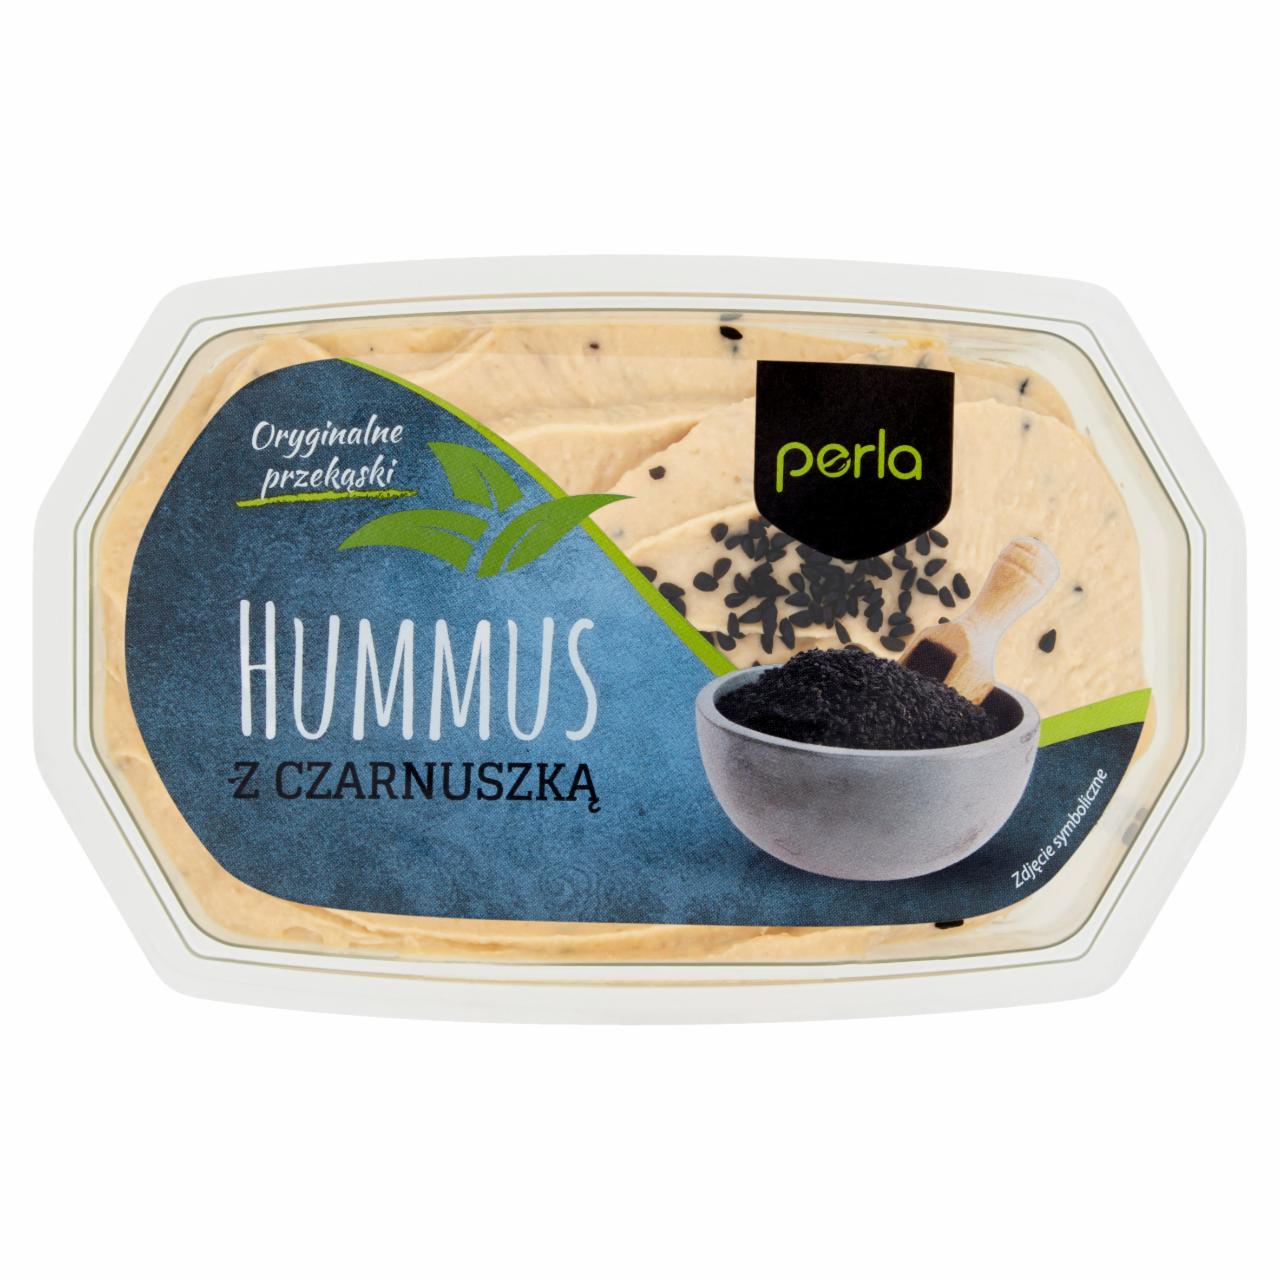 Zdjęcia - Perla Hummus z czarnuszką 180 g